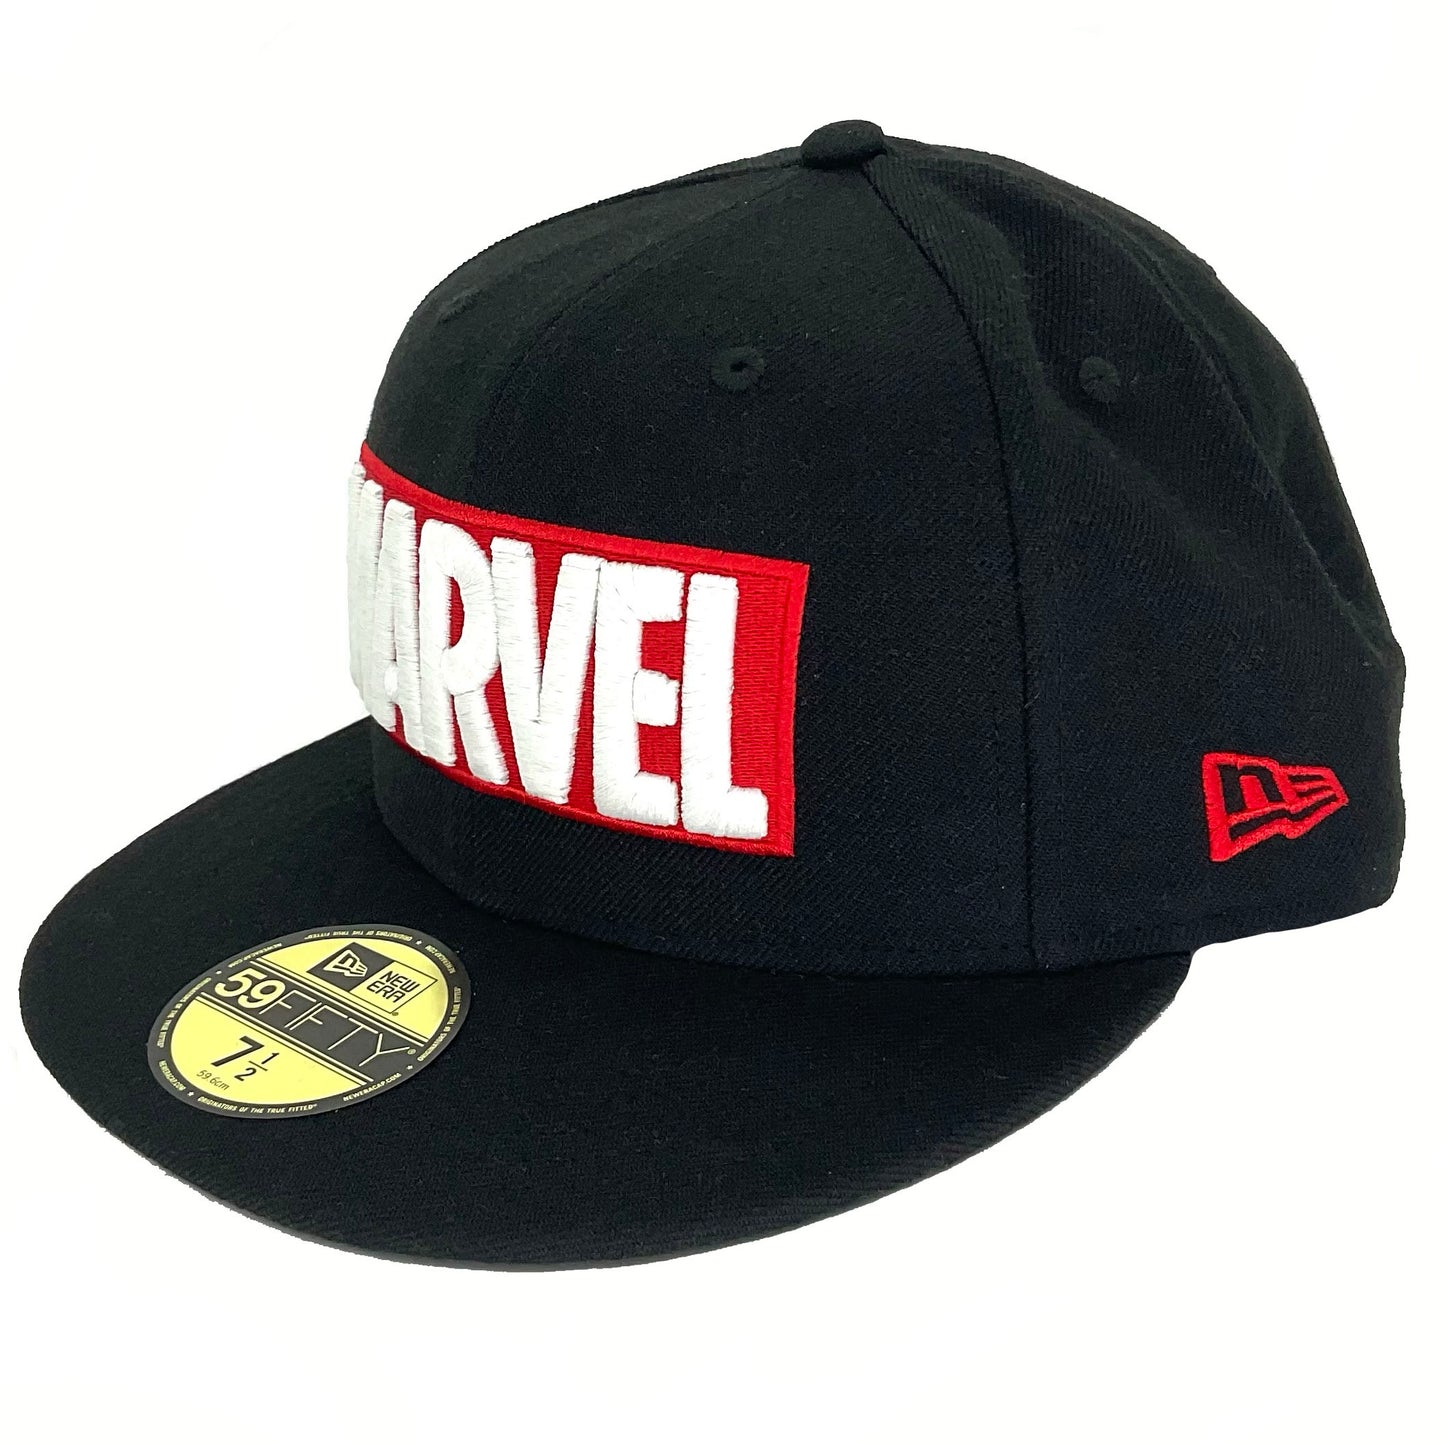 Marvel Boxlogo Jf Exclusive New Era 59FIFTY Cap Black Glow